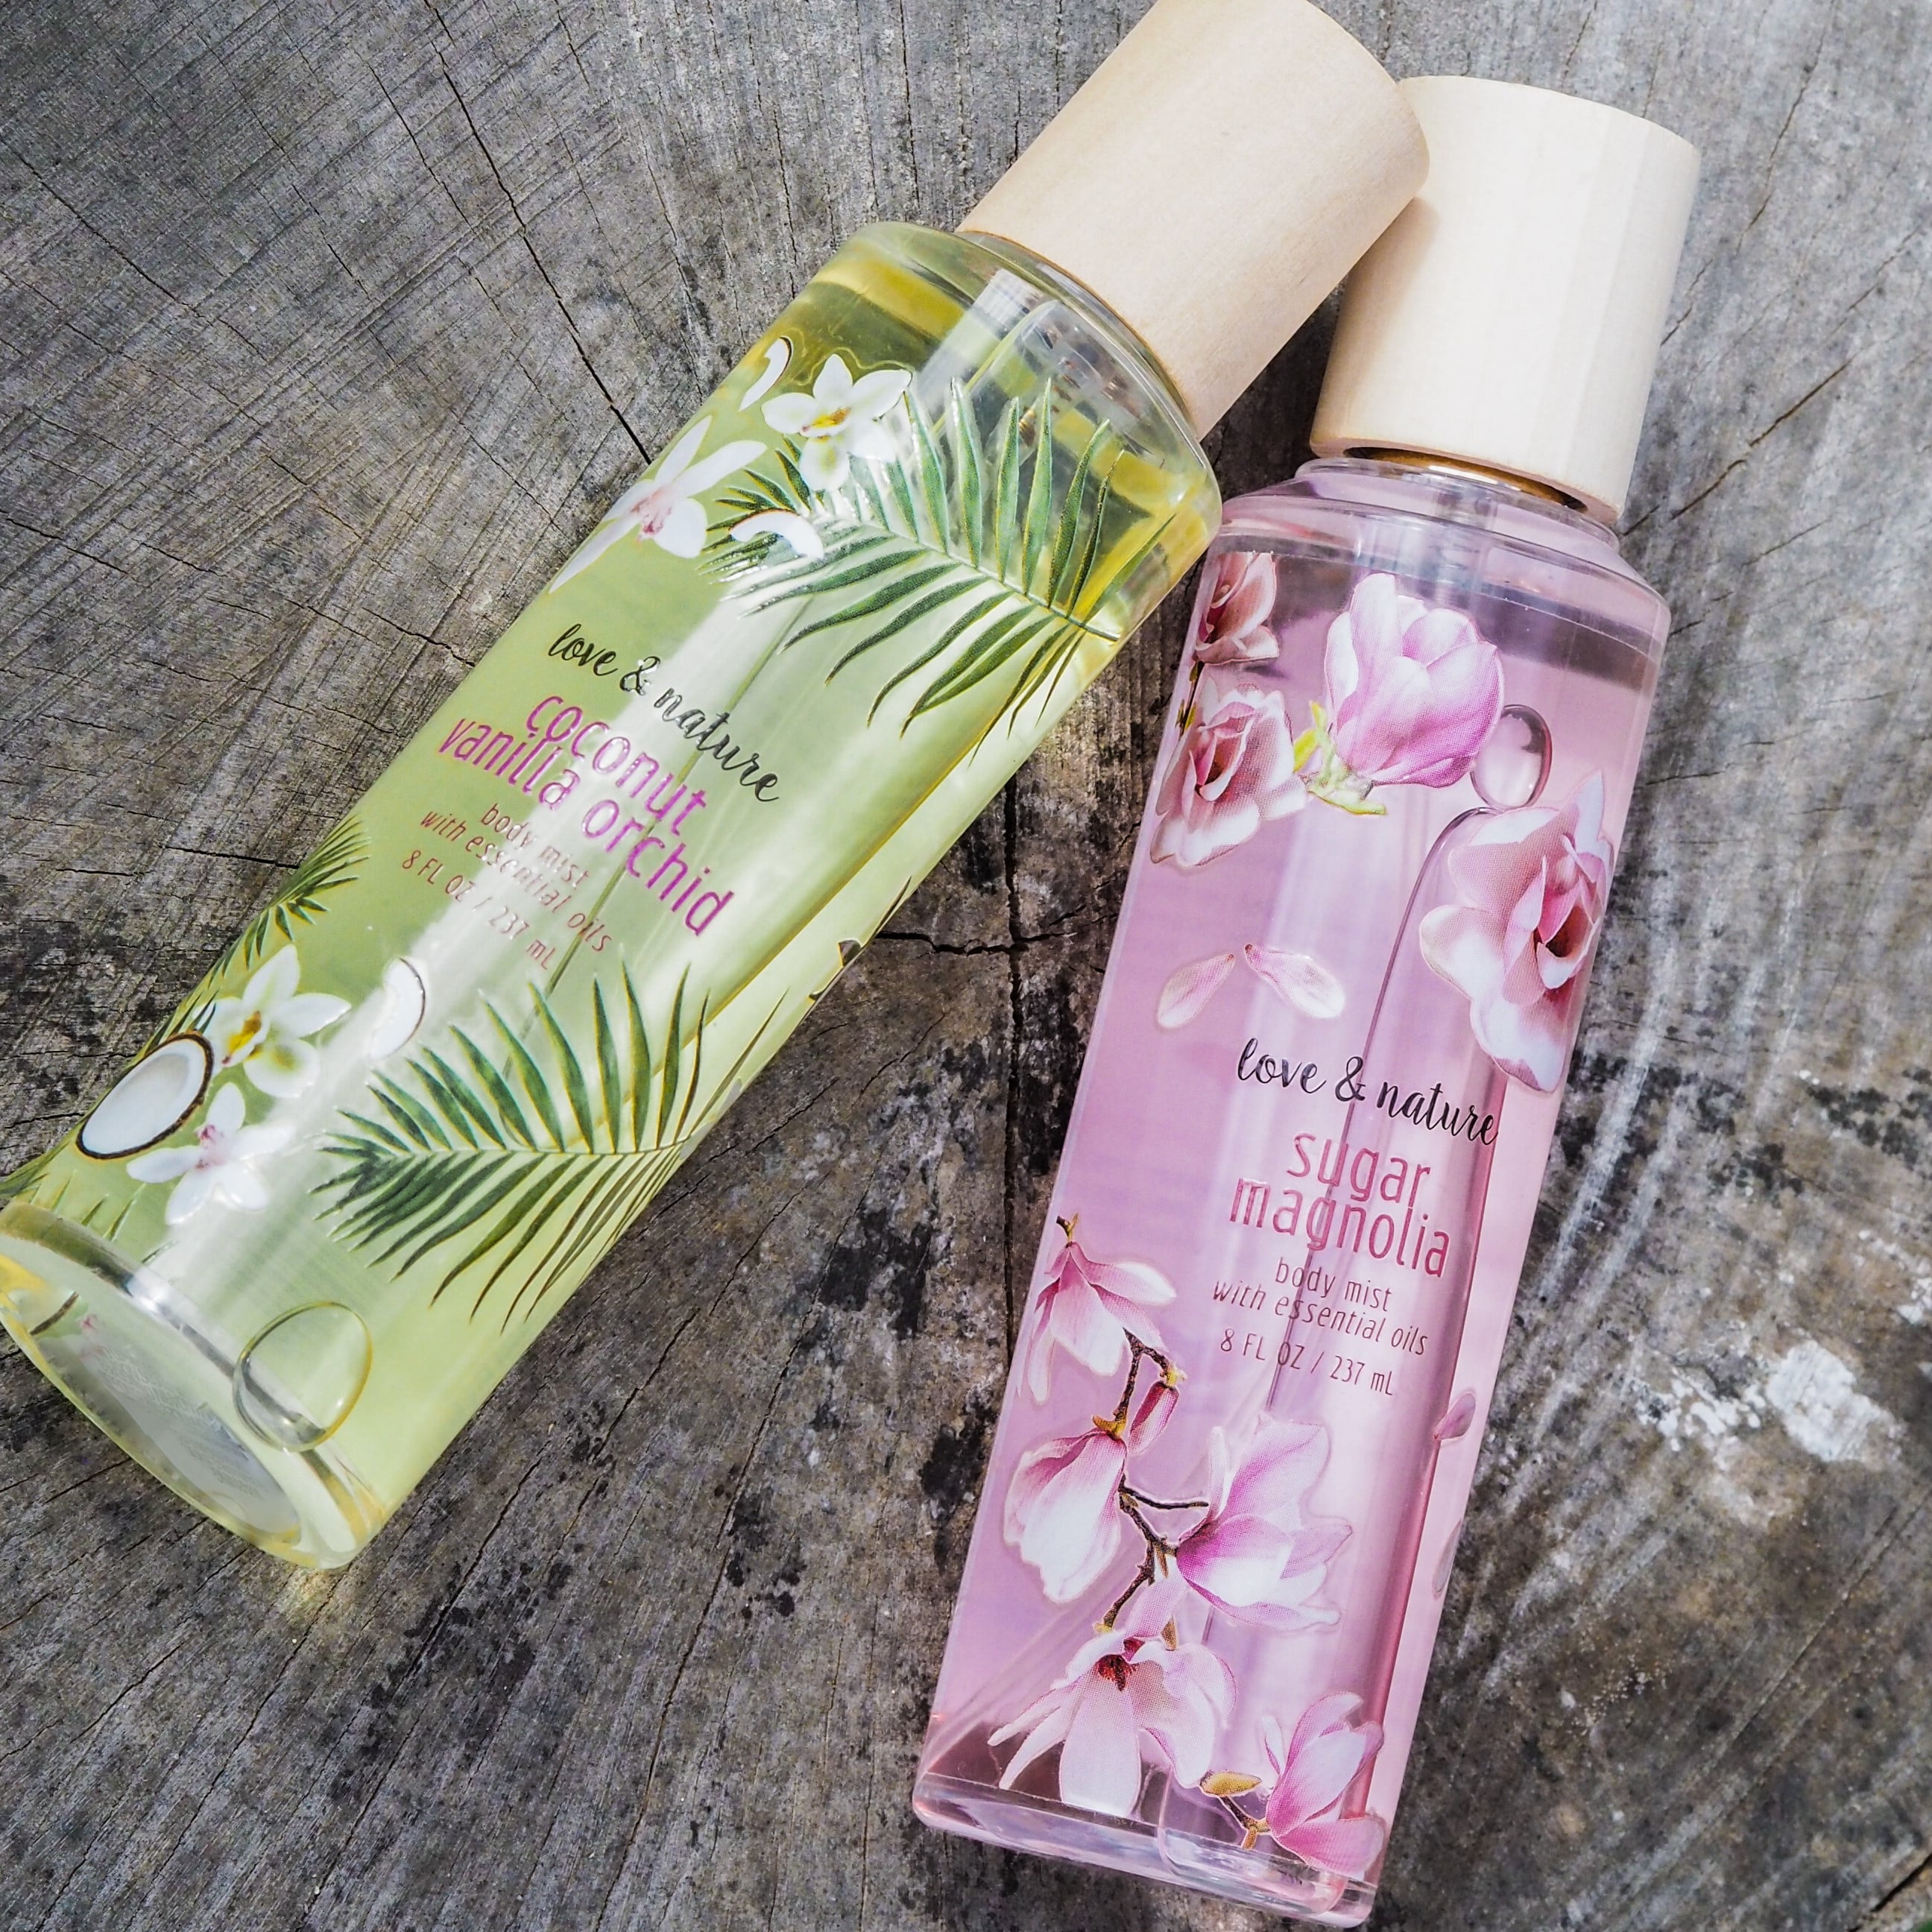 Love & Nature Vegan Fragrance Body Mist, Coconut Vanilla Orchid with  Essential Oils, 8 fl oz 